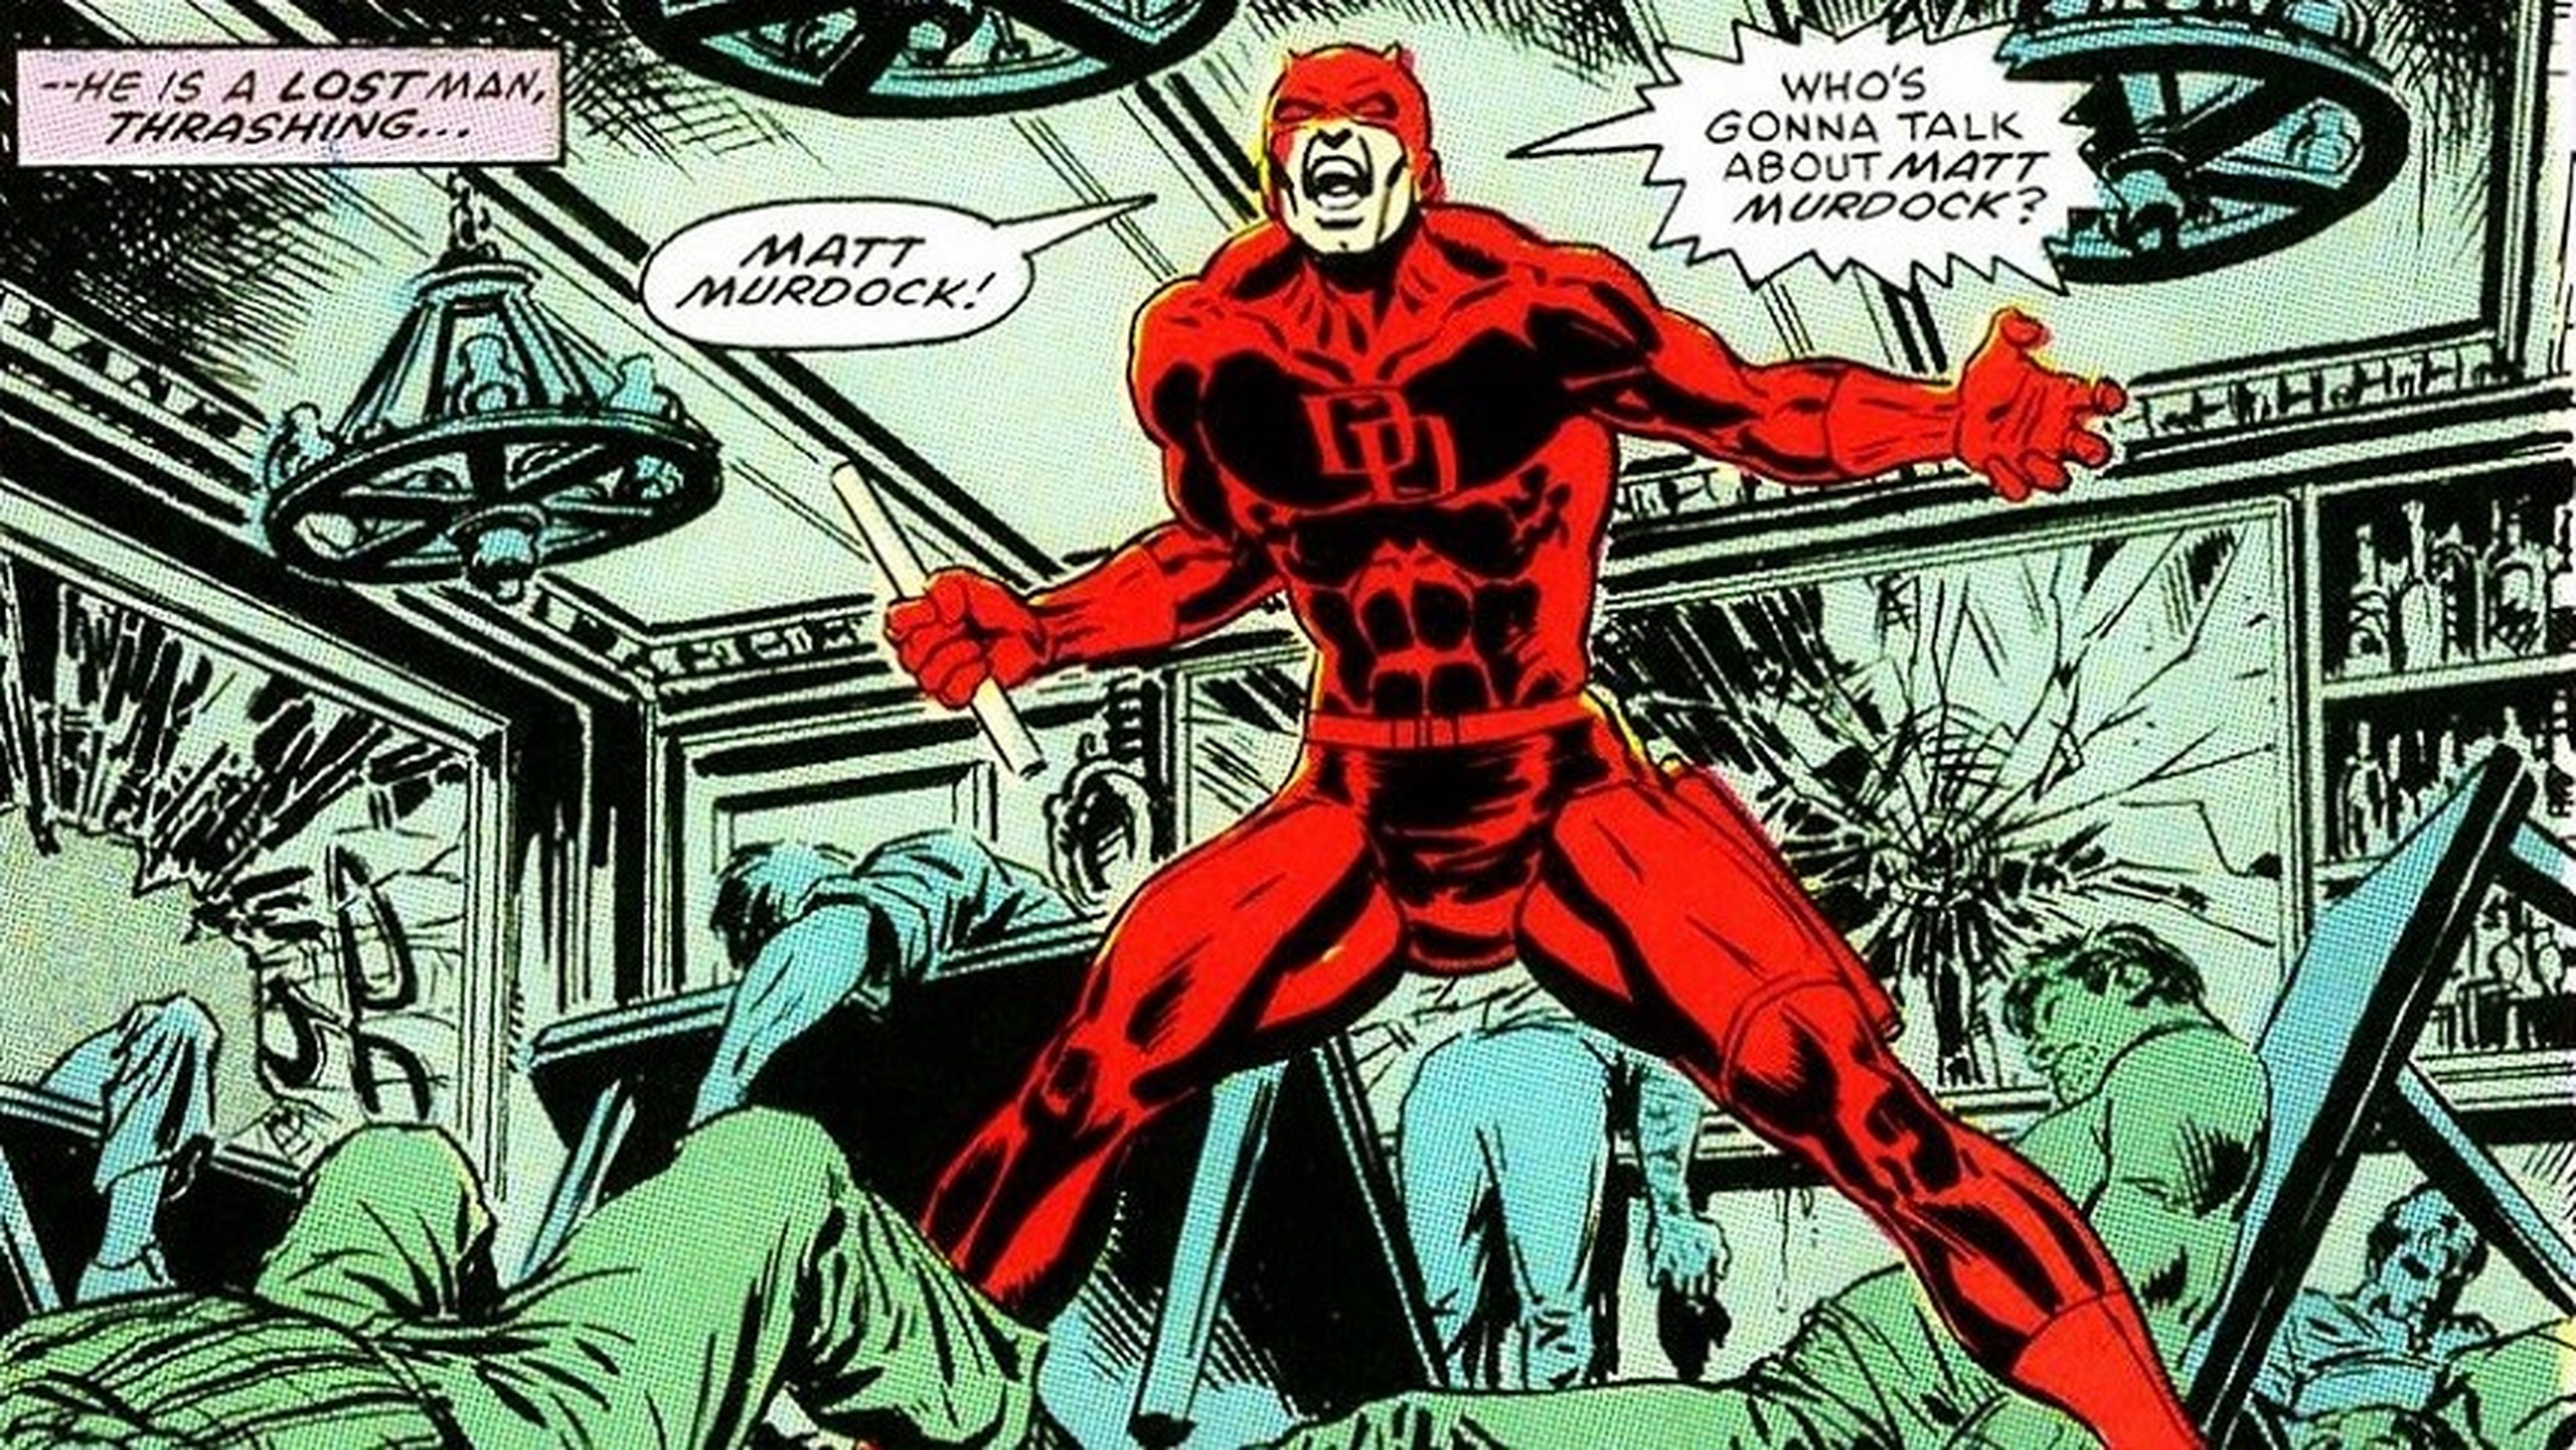 Daredevil Born Again - Review del clásico de Frank Miller